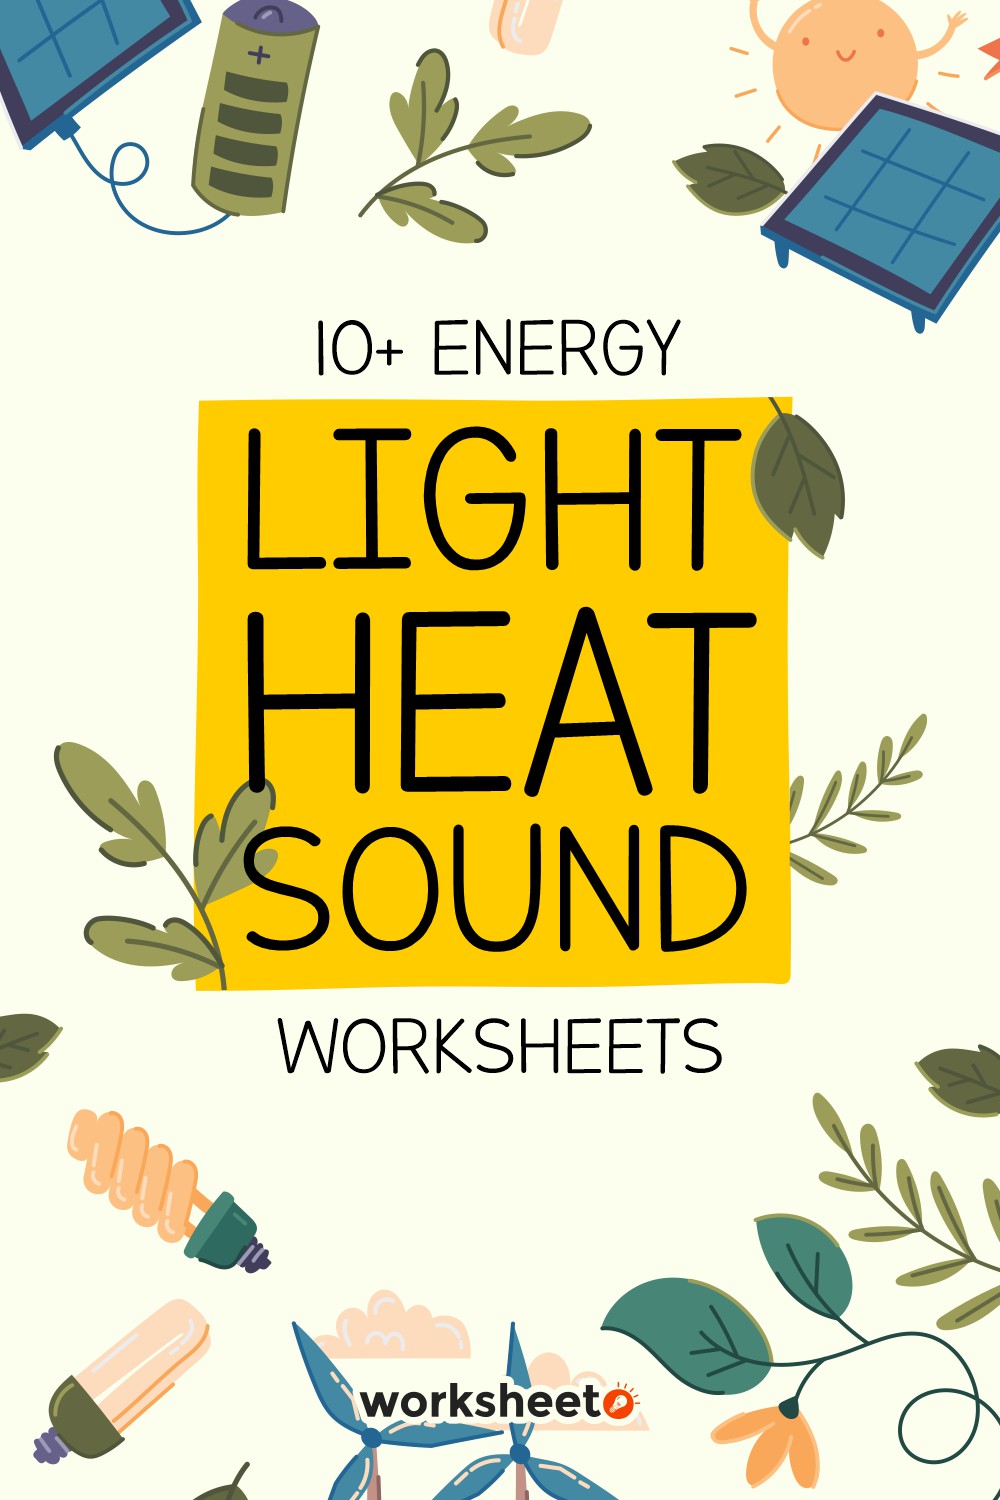 14 Images of Energy Light Heat Sound Worksheets